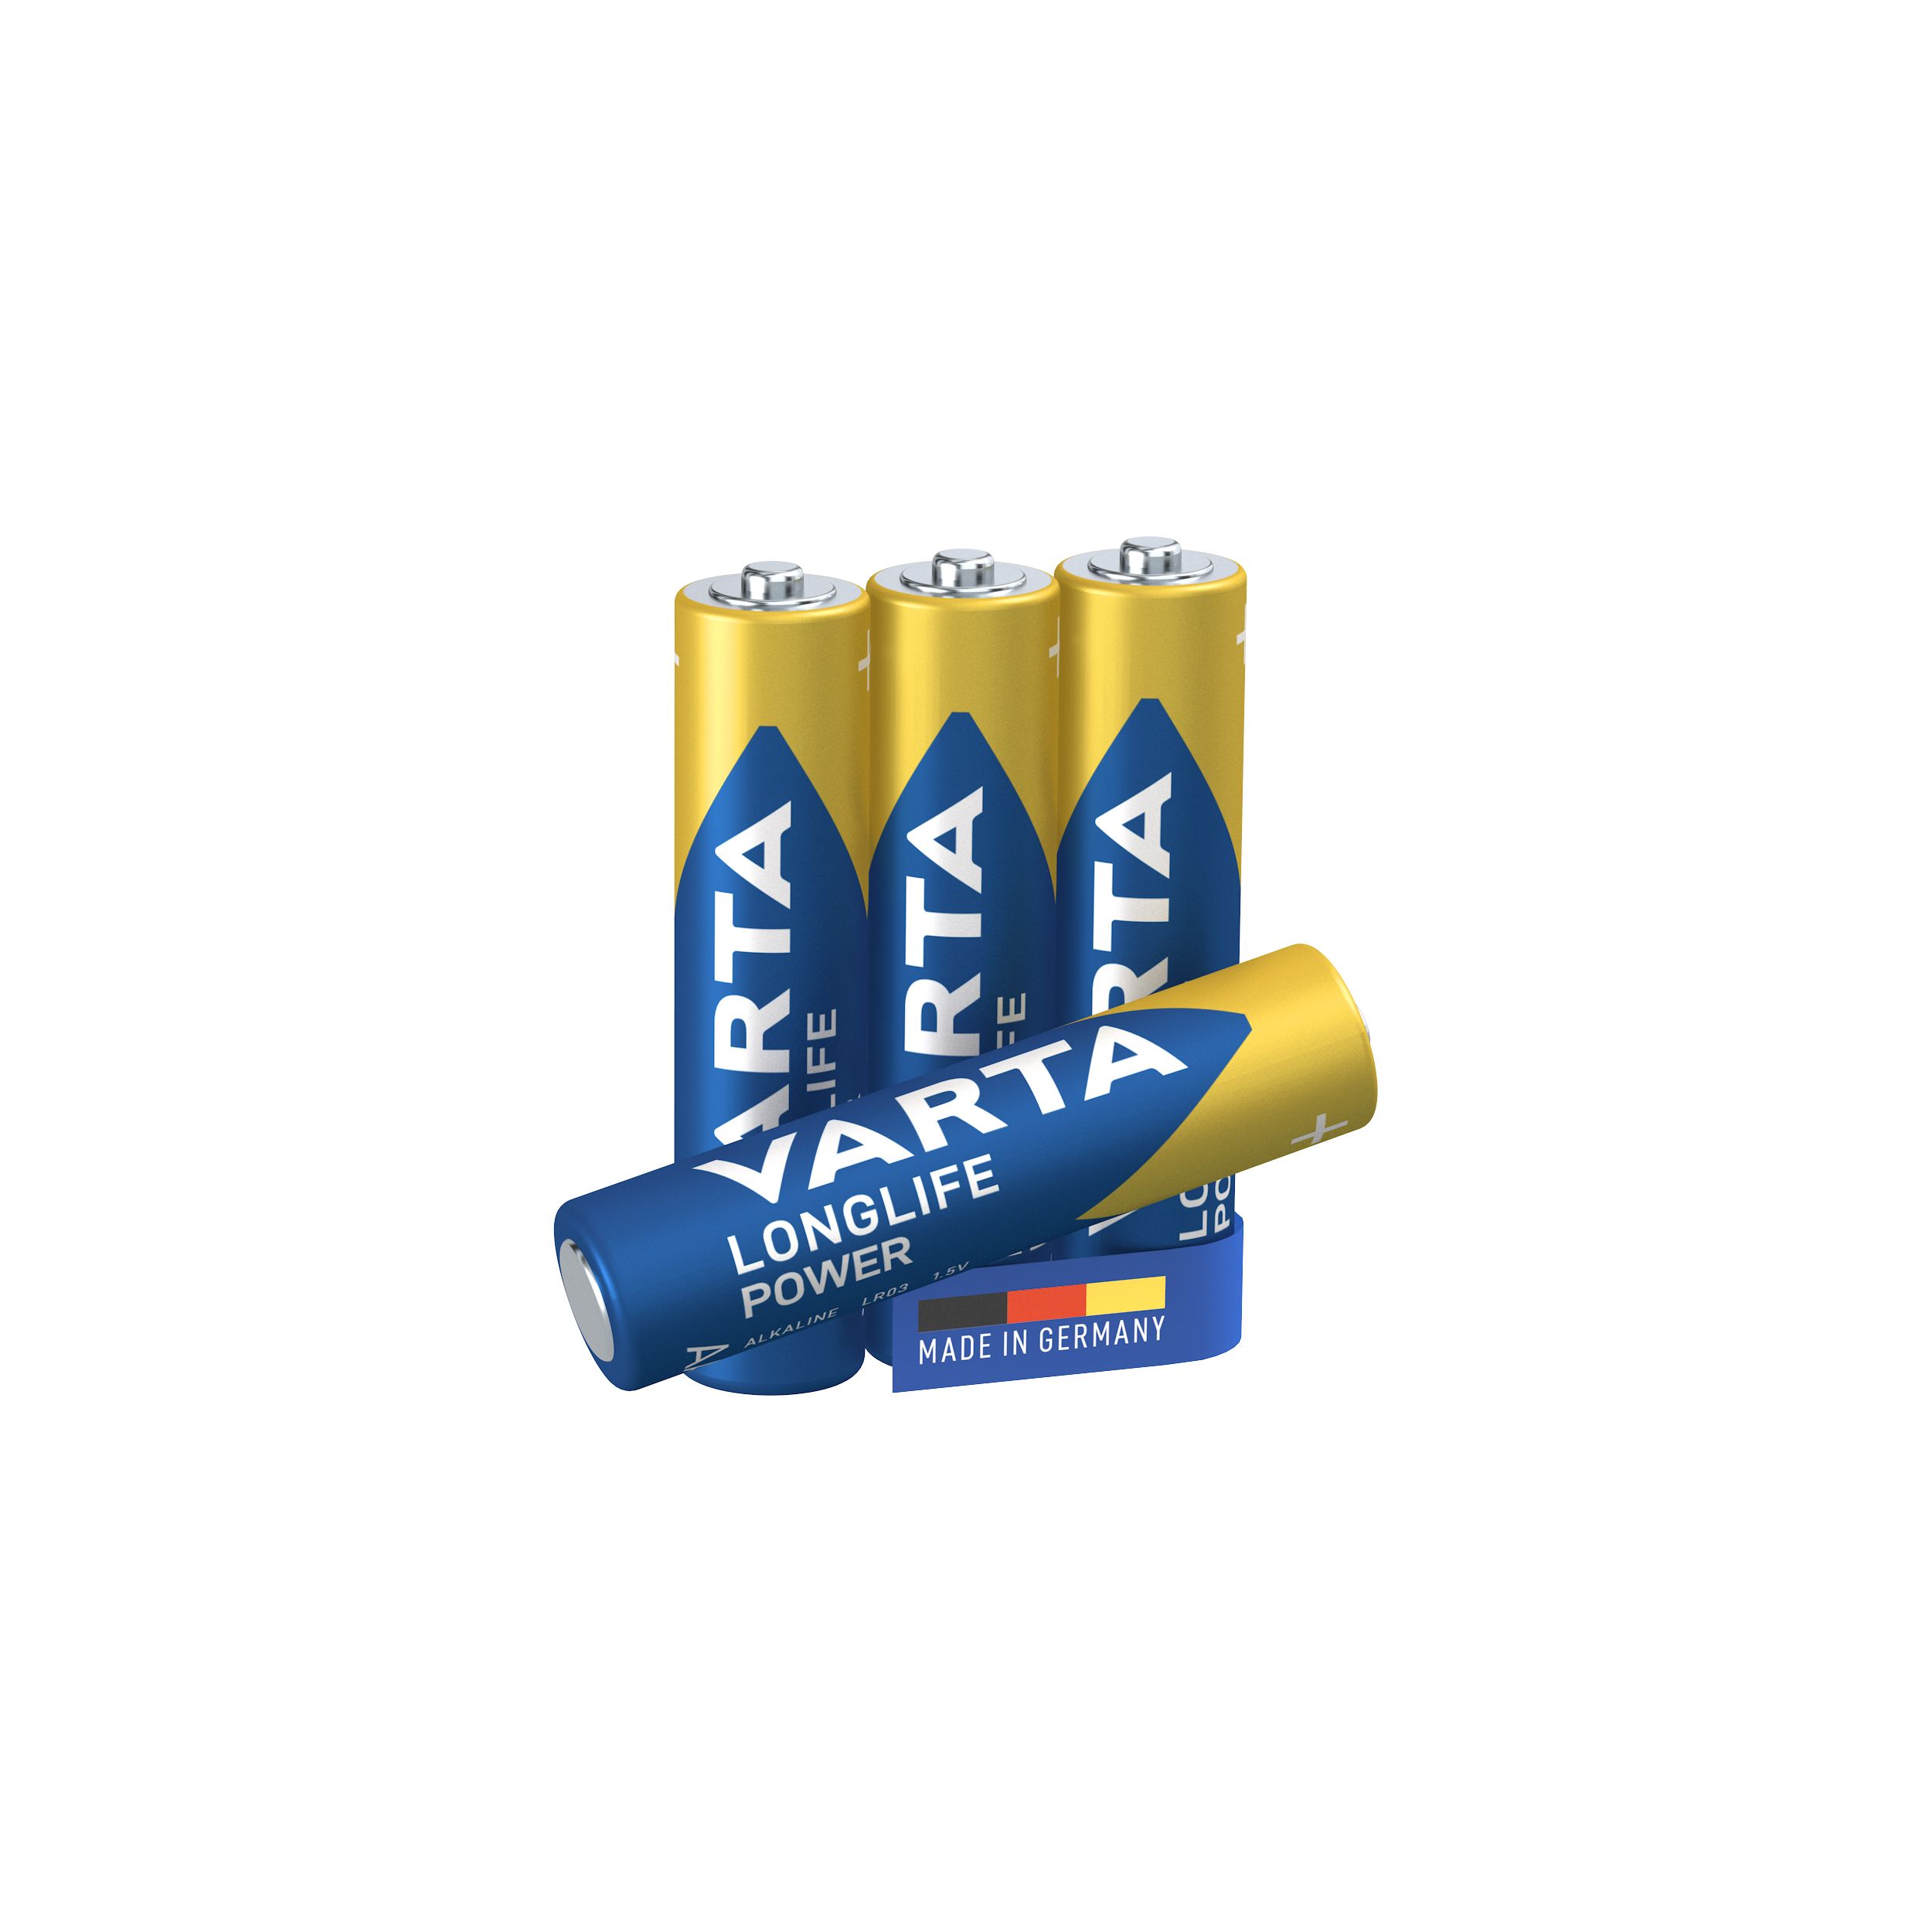 Varta Longlife Power 1.5V AAA Battery, Pack of 4